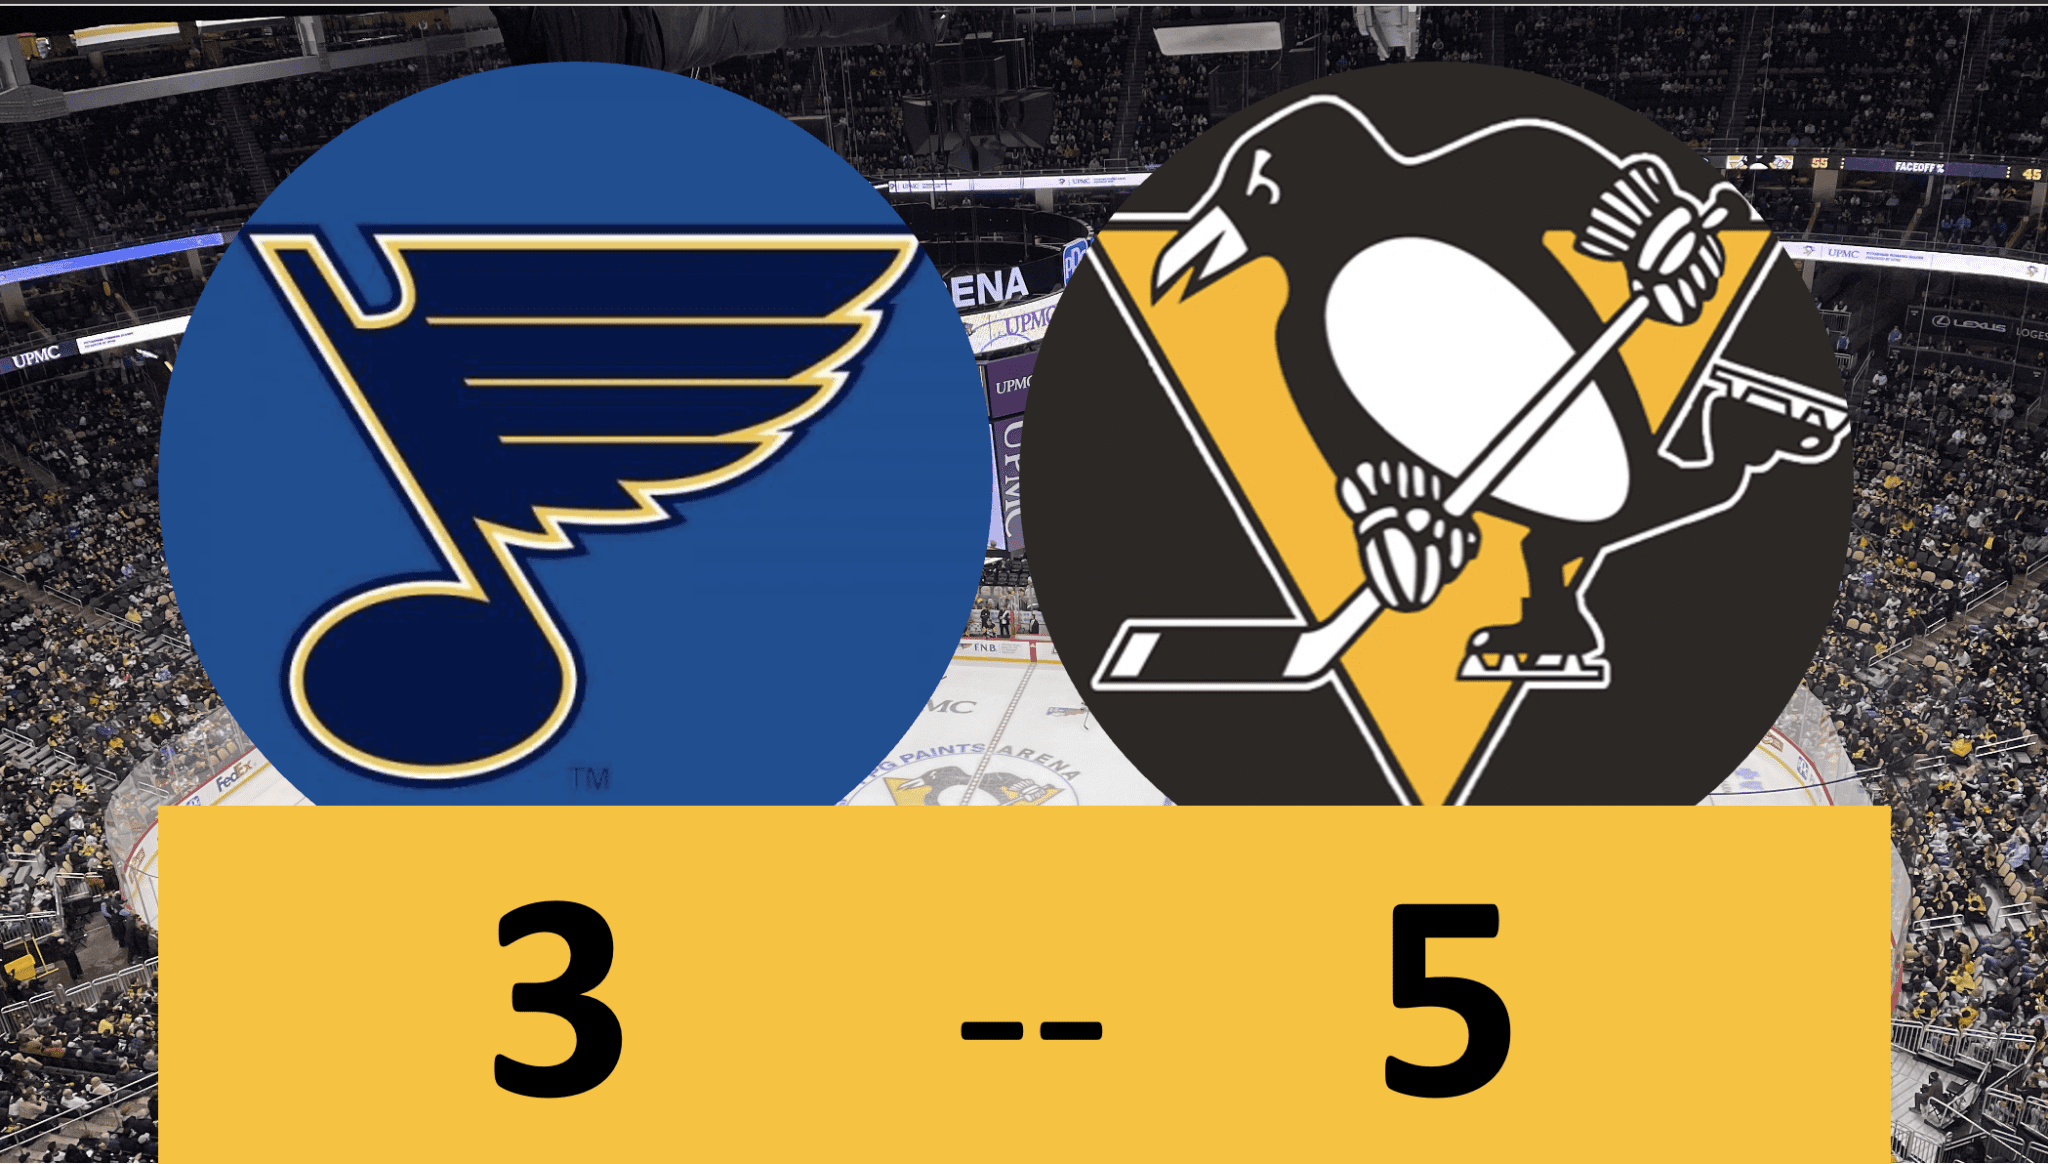 Pittsburgh Penguins win, St. Louis Blues 5-3